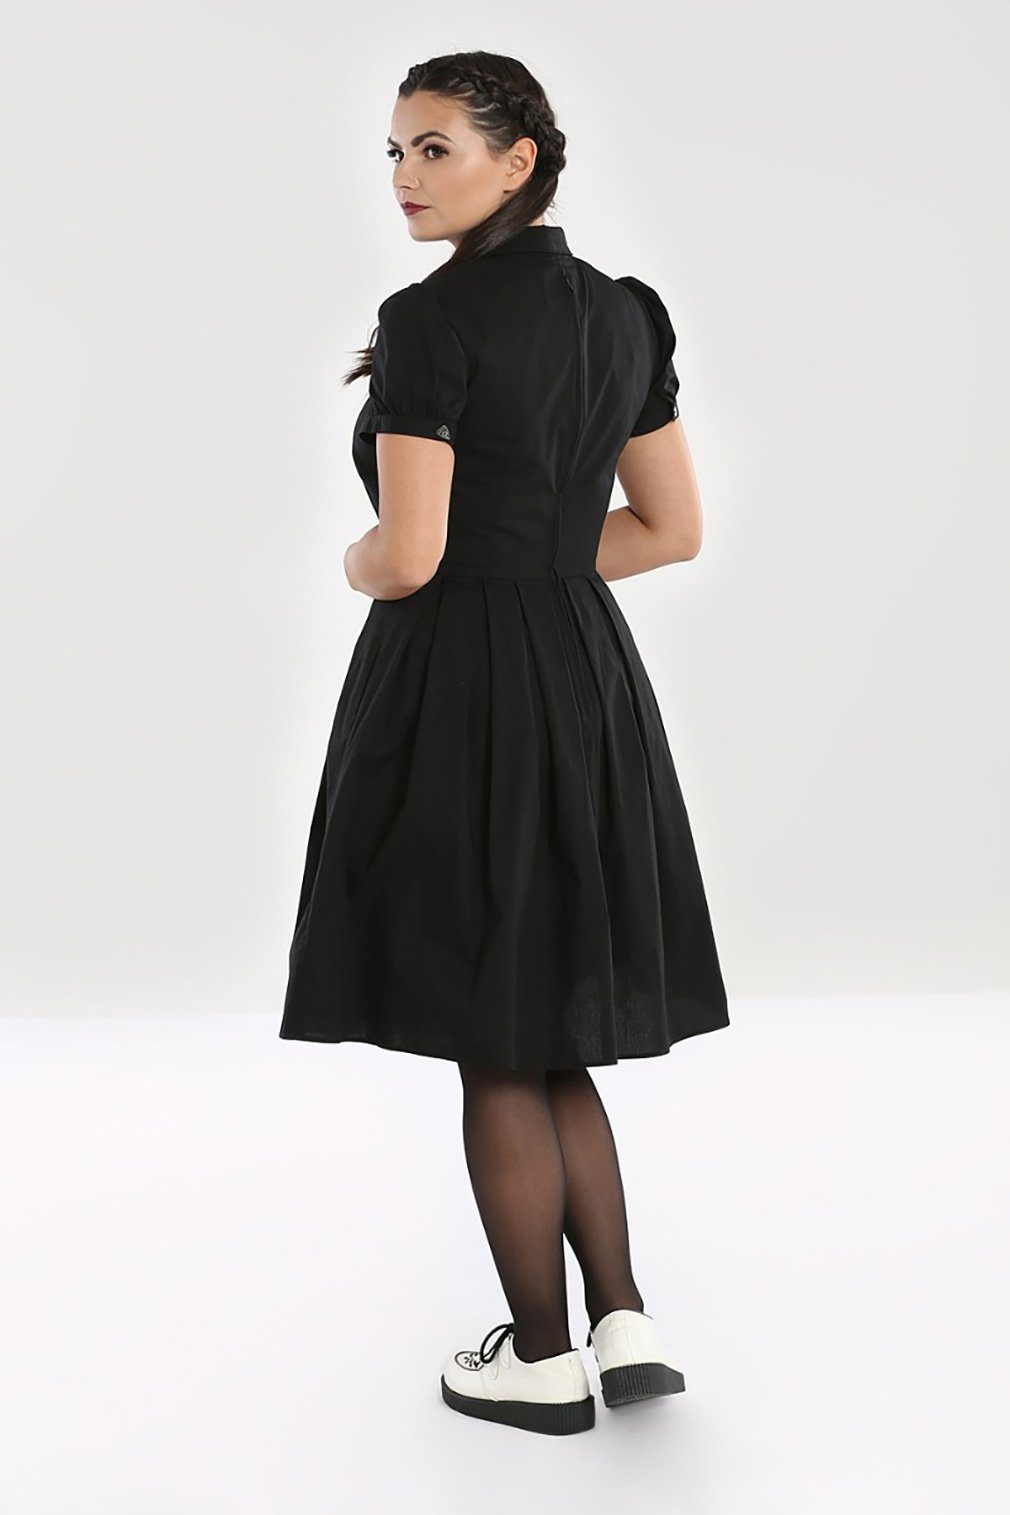 Hell Gothic Dress Bunny Samara Ouija Knopf Applikation A-Linien-Kleid